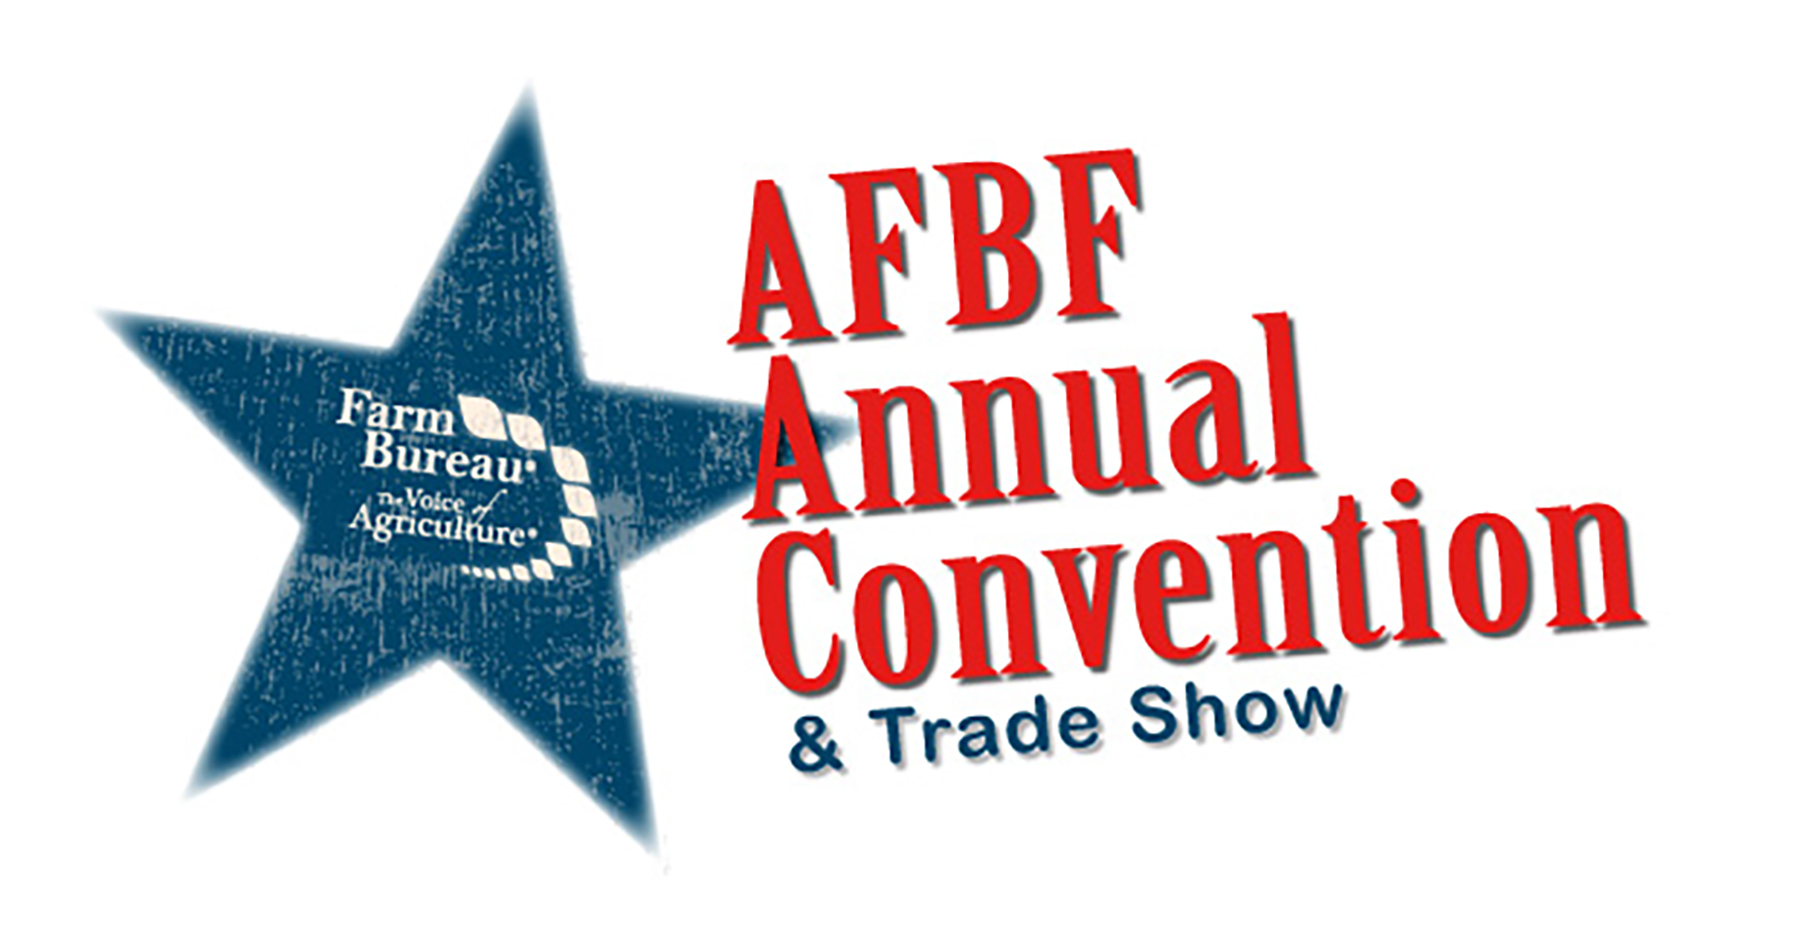 AFBF convention 2020